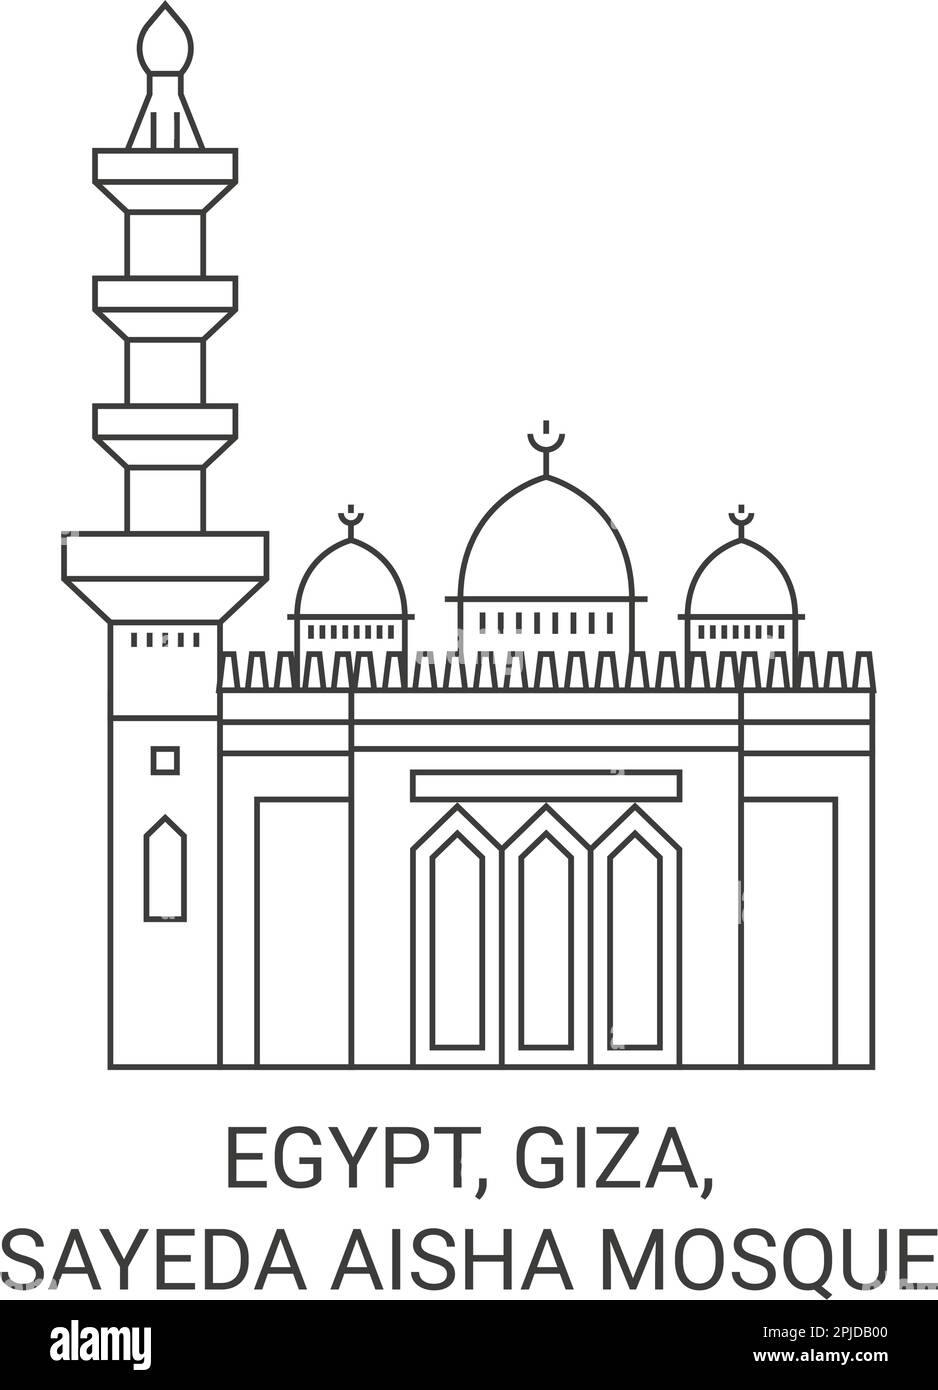 Egypt, Giza, Sayeda Aisha Mosque travel landmark vector illustration ...